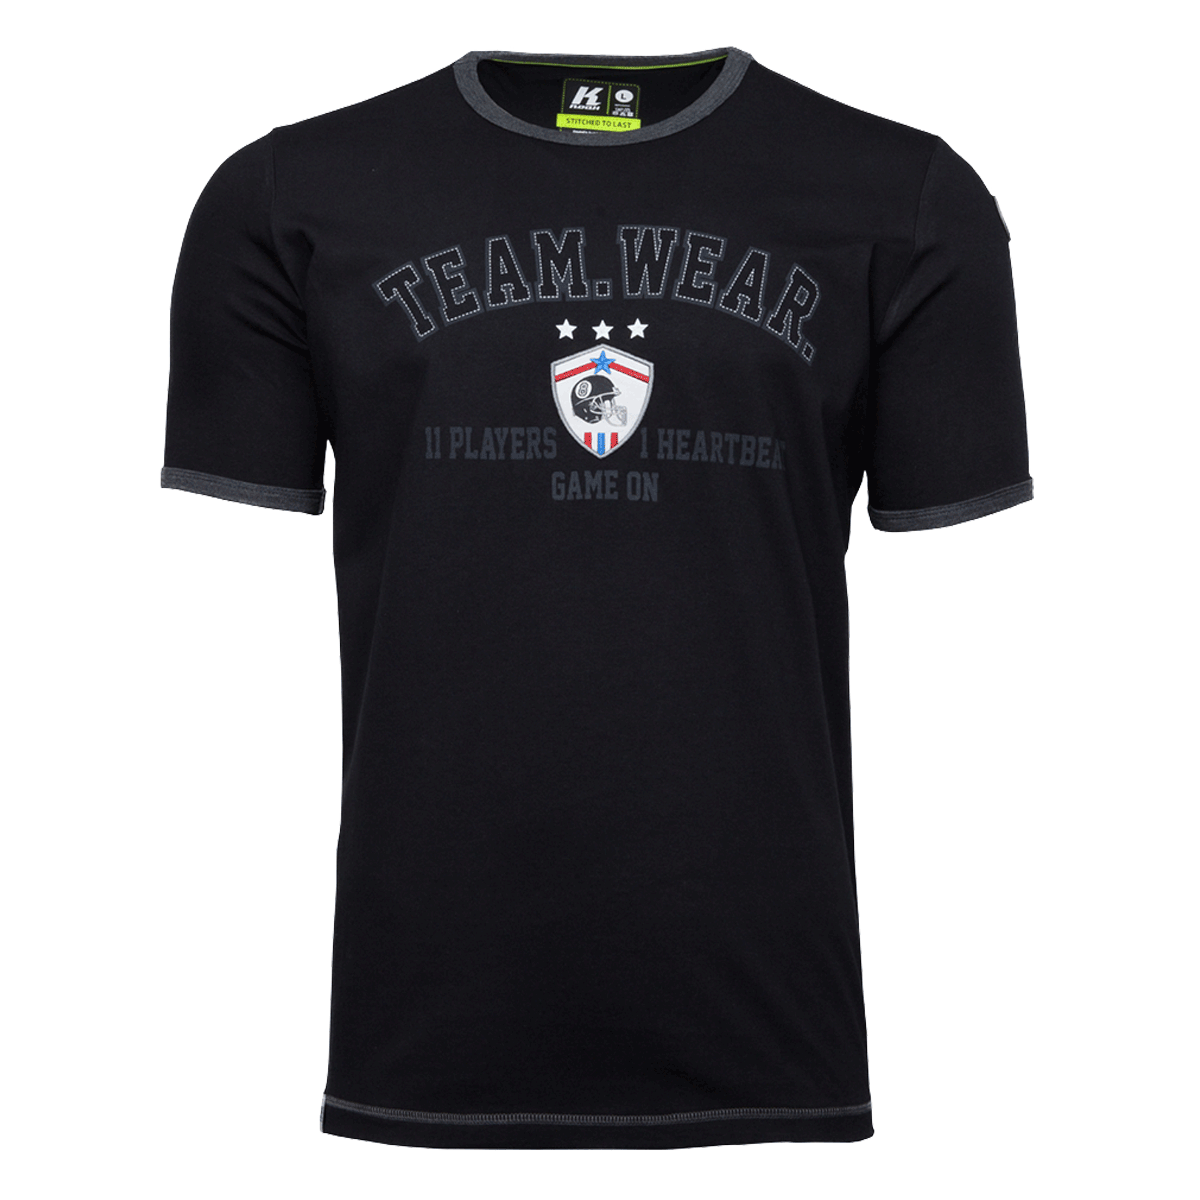 T-Shirt_TeamWear_black